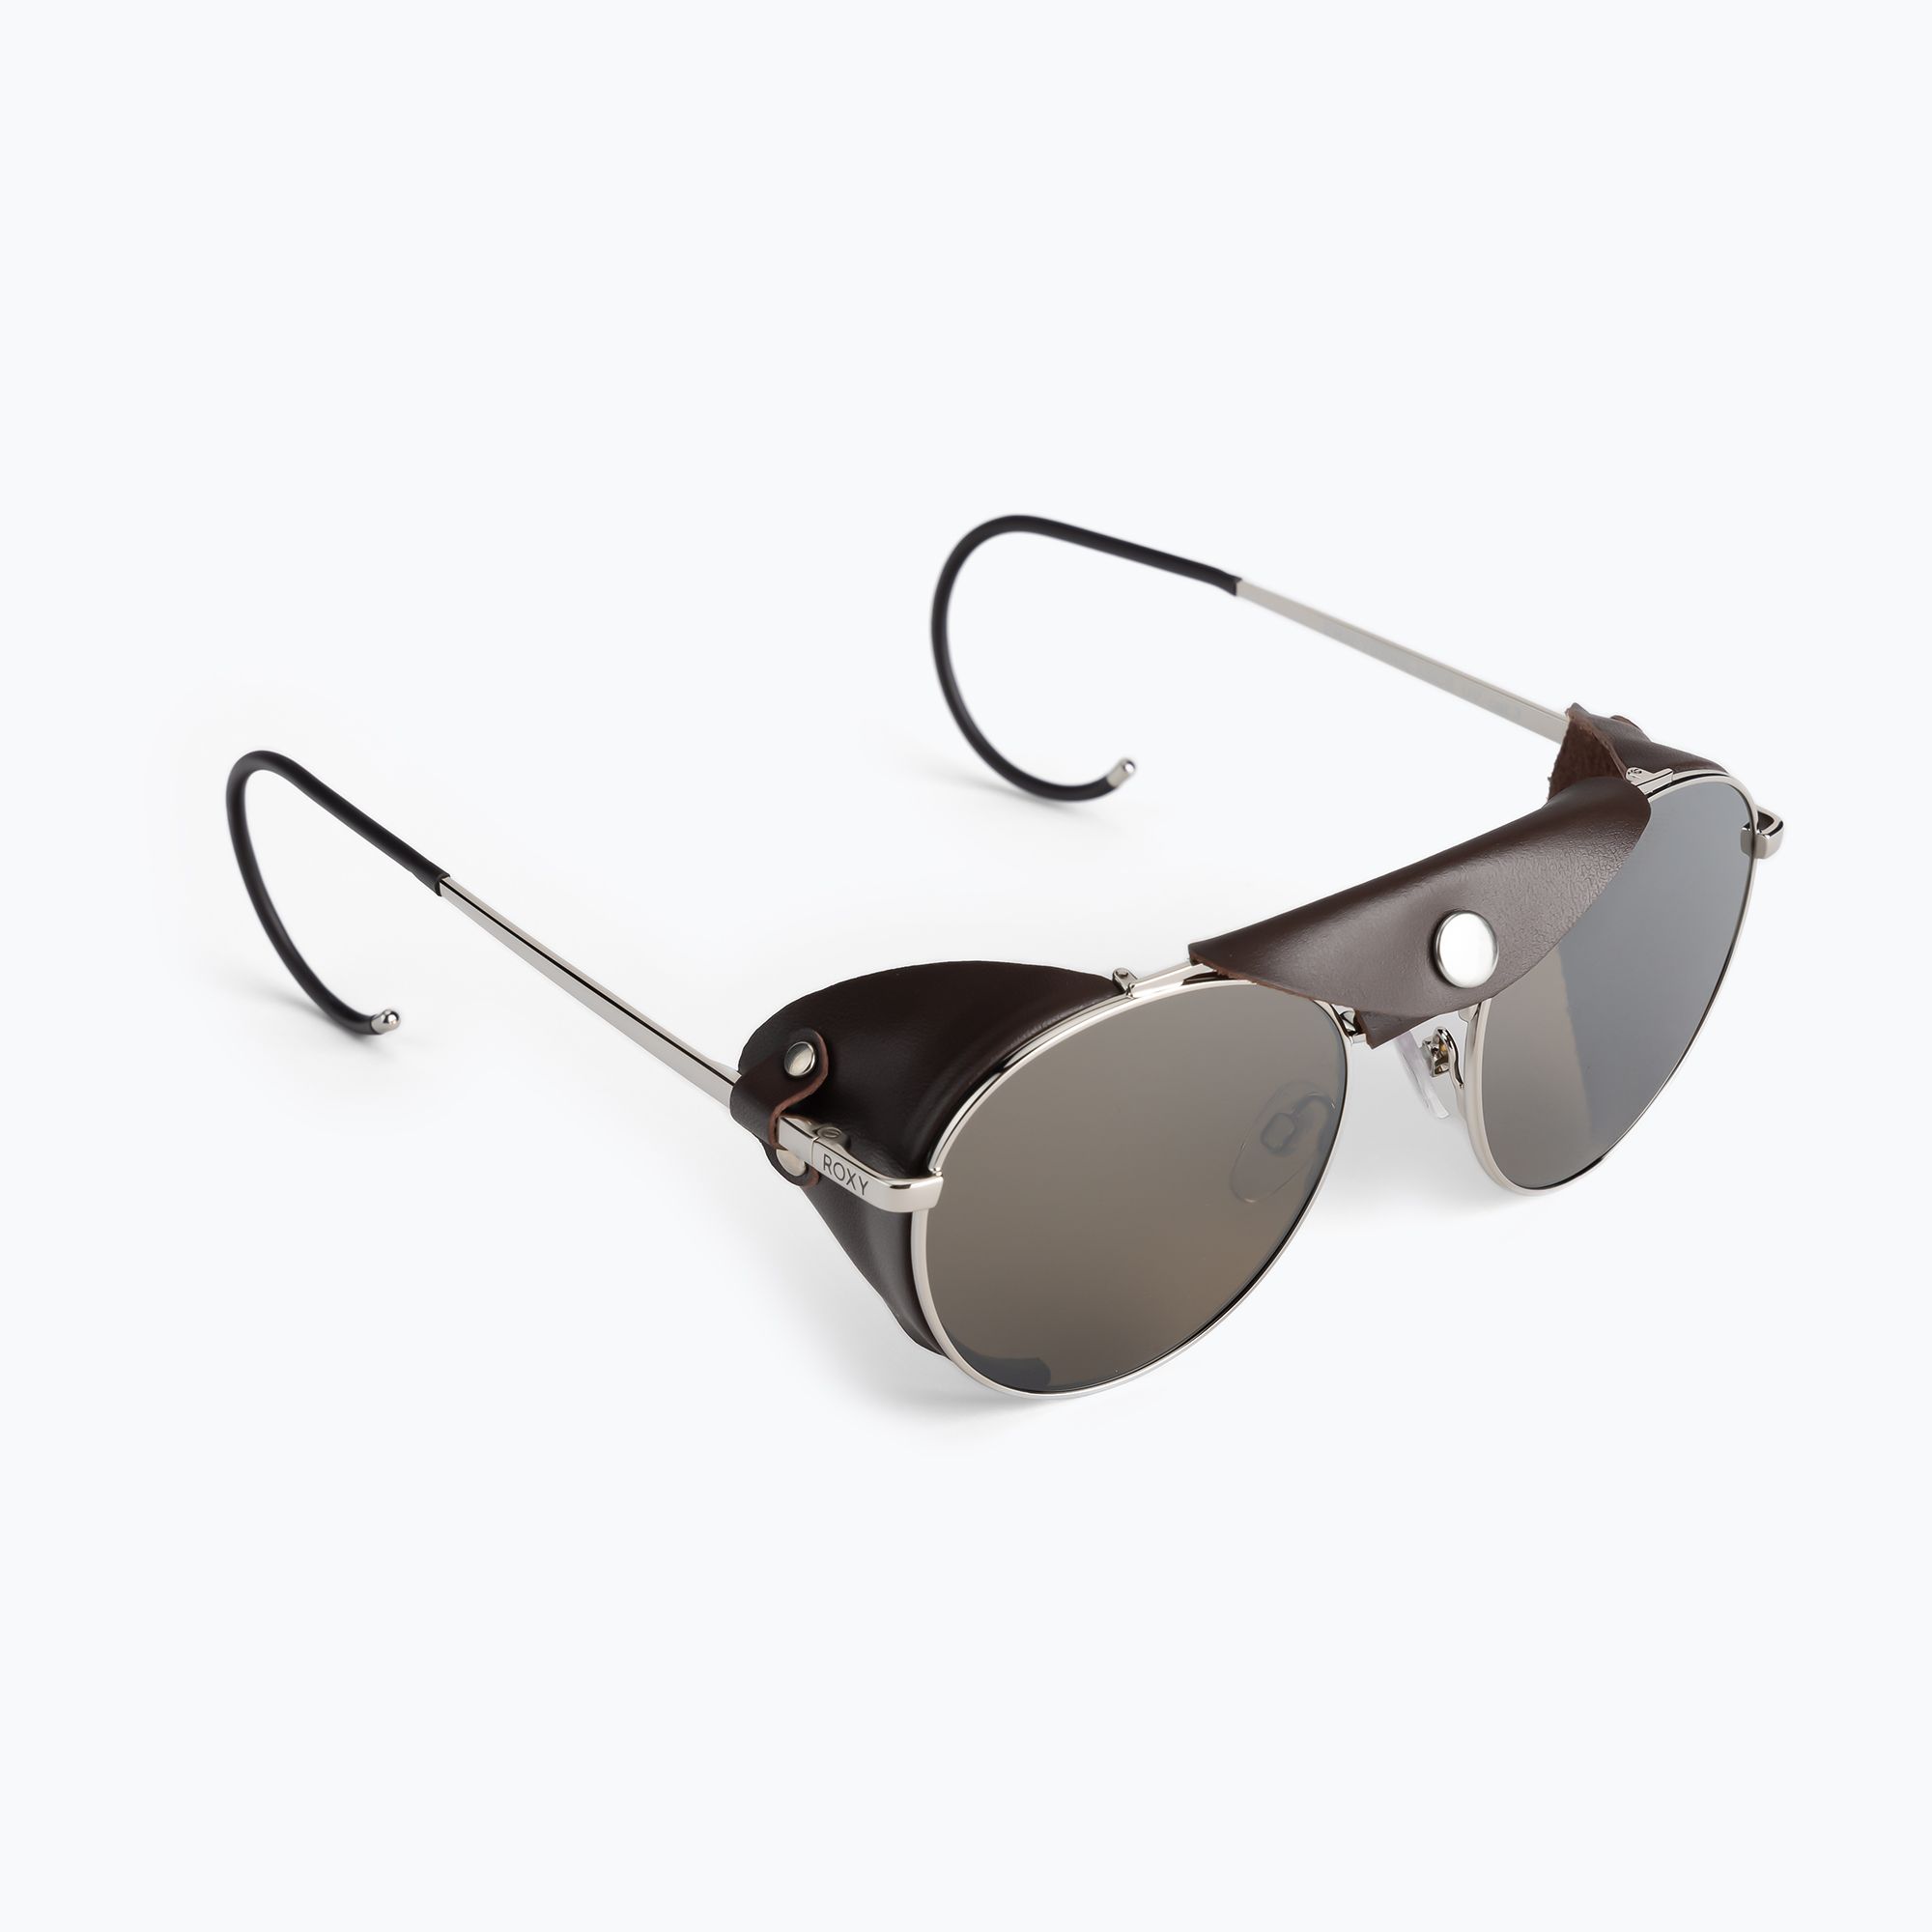 Women\'s sunglasses ROXY Blizzard 2021 shiny silver/brown leather